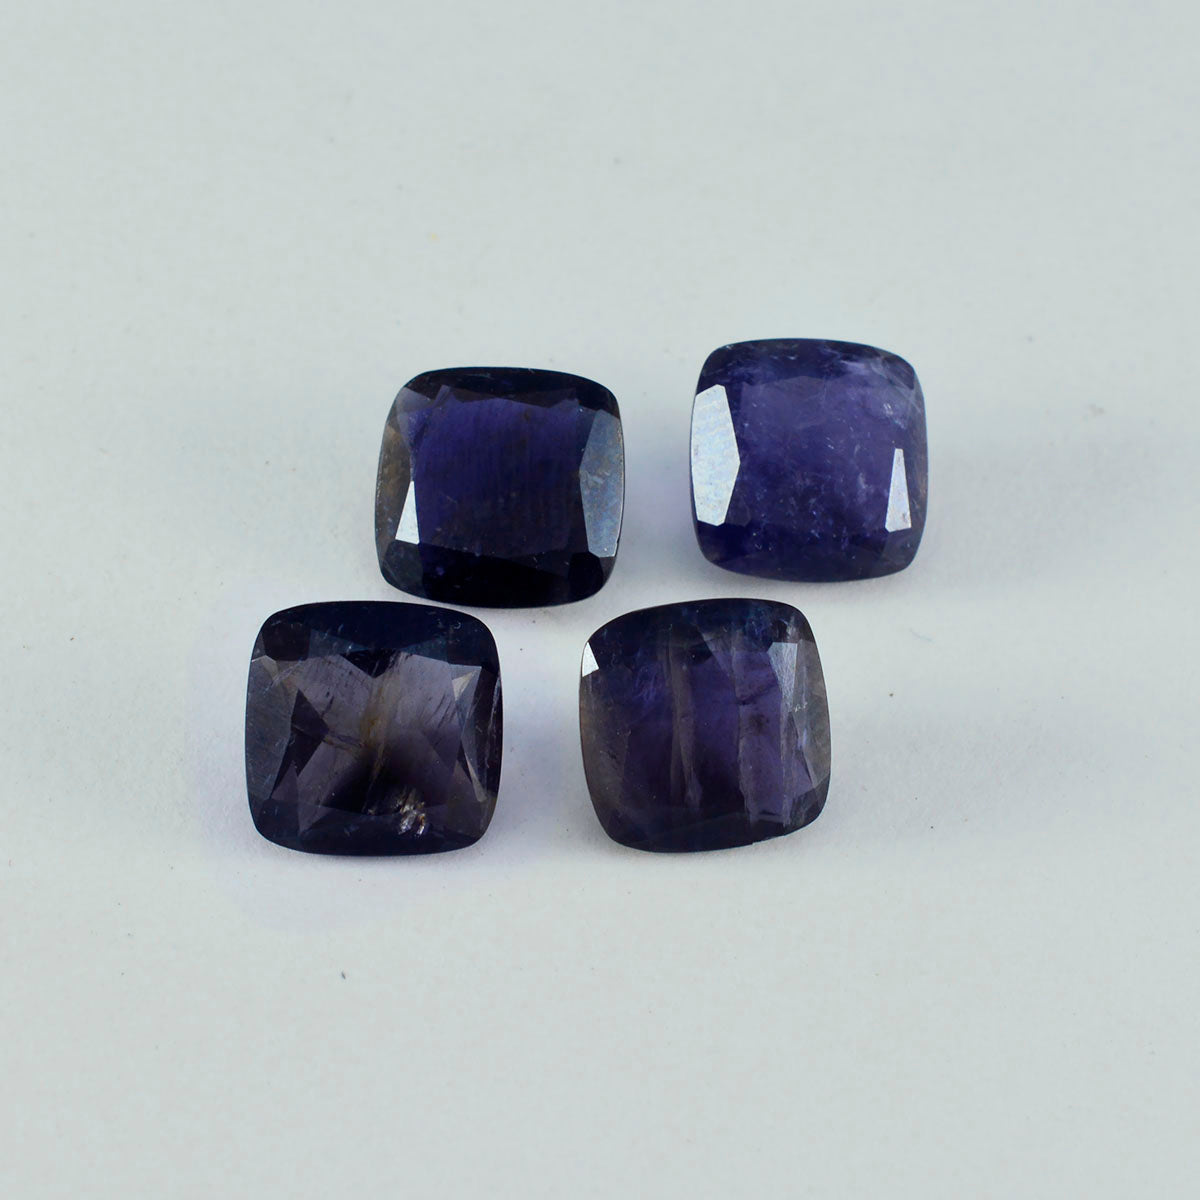 Riyogems 1PC Blue Iolite Faceted 12x12 mm Cushion Shape fantastic Quality Loose Gems